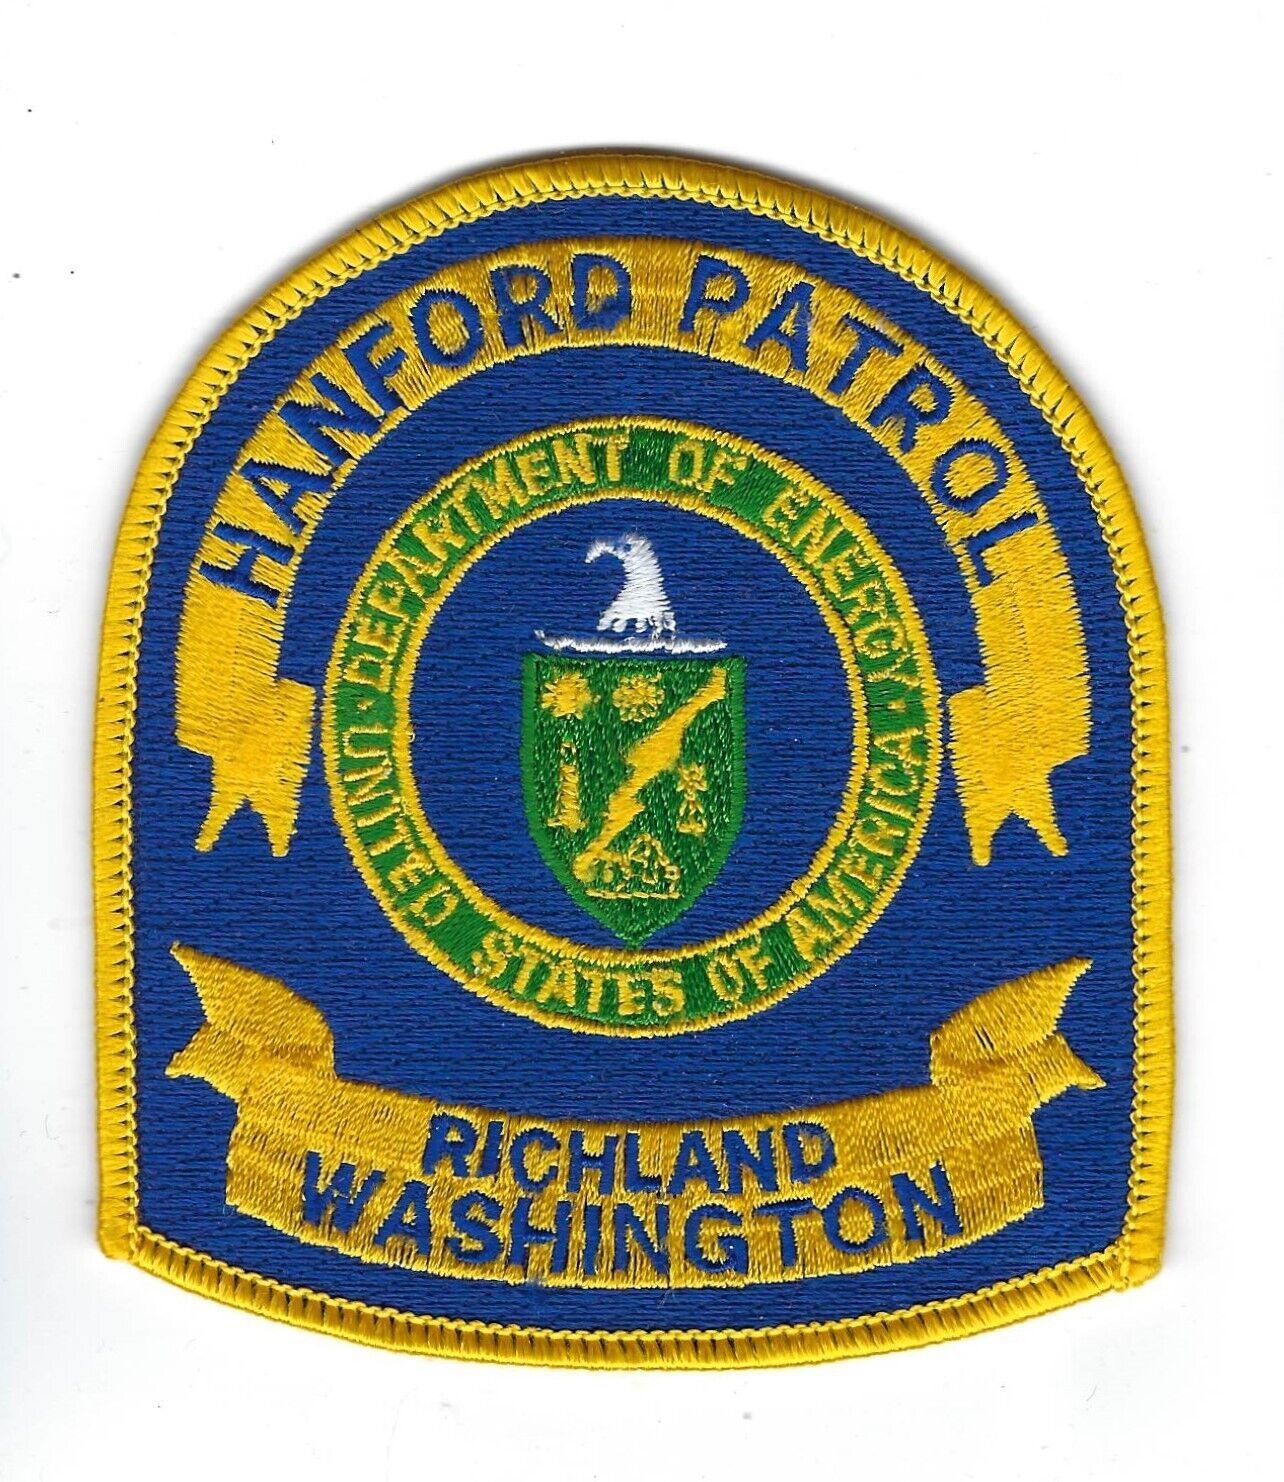 Hanford Patrol Nuclear Power Dept of Energy Richland WA Washington patch - NEW